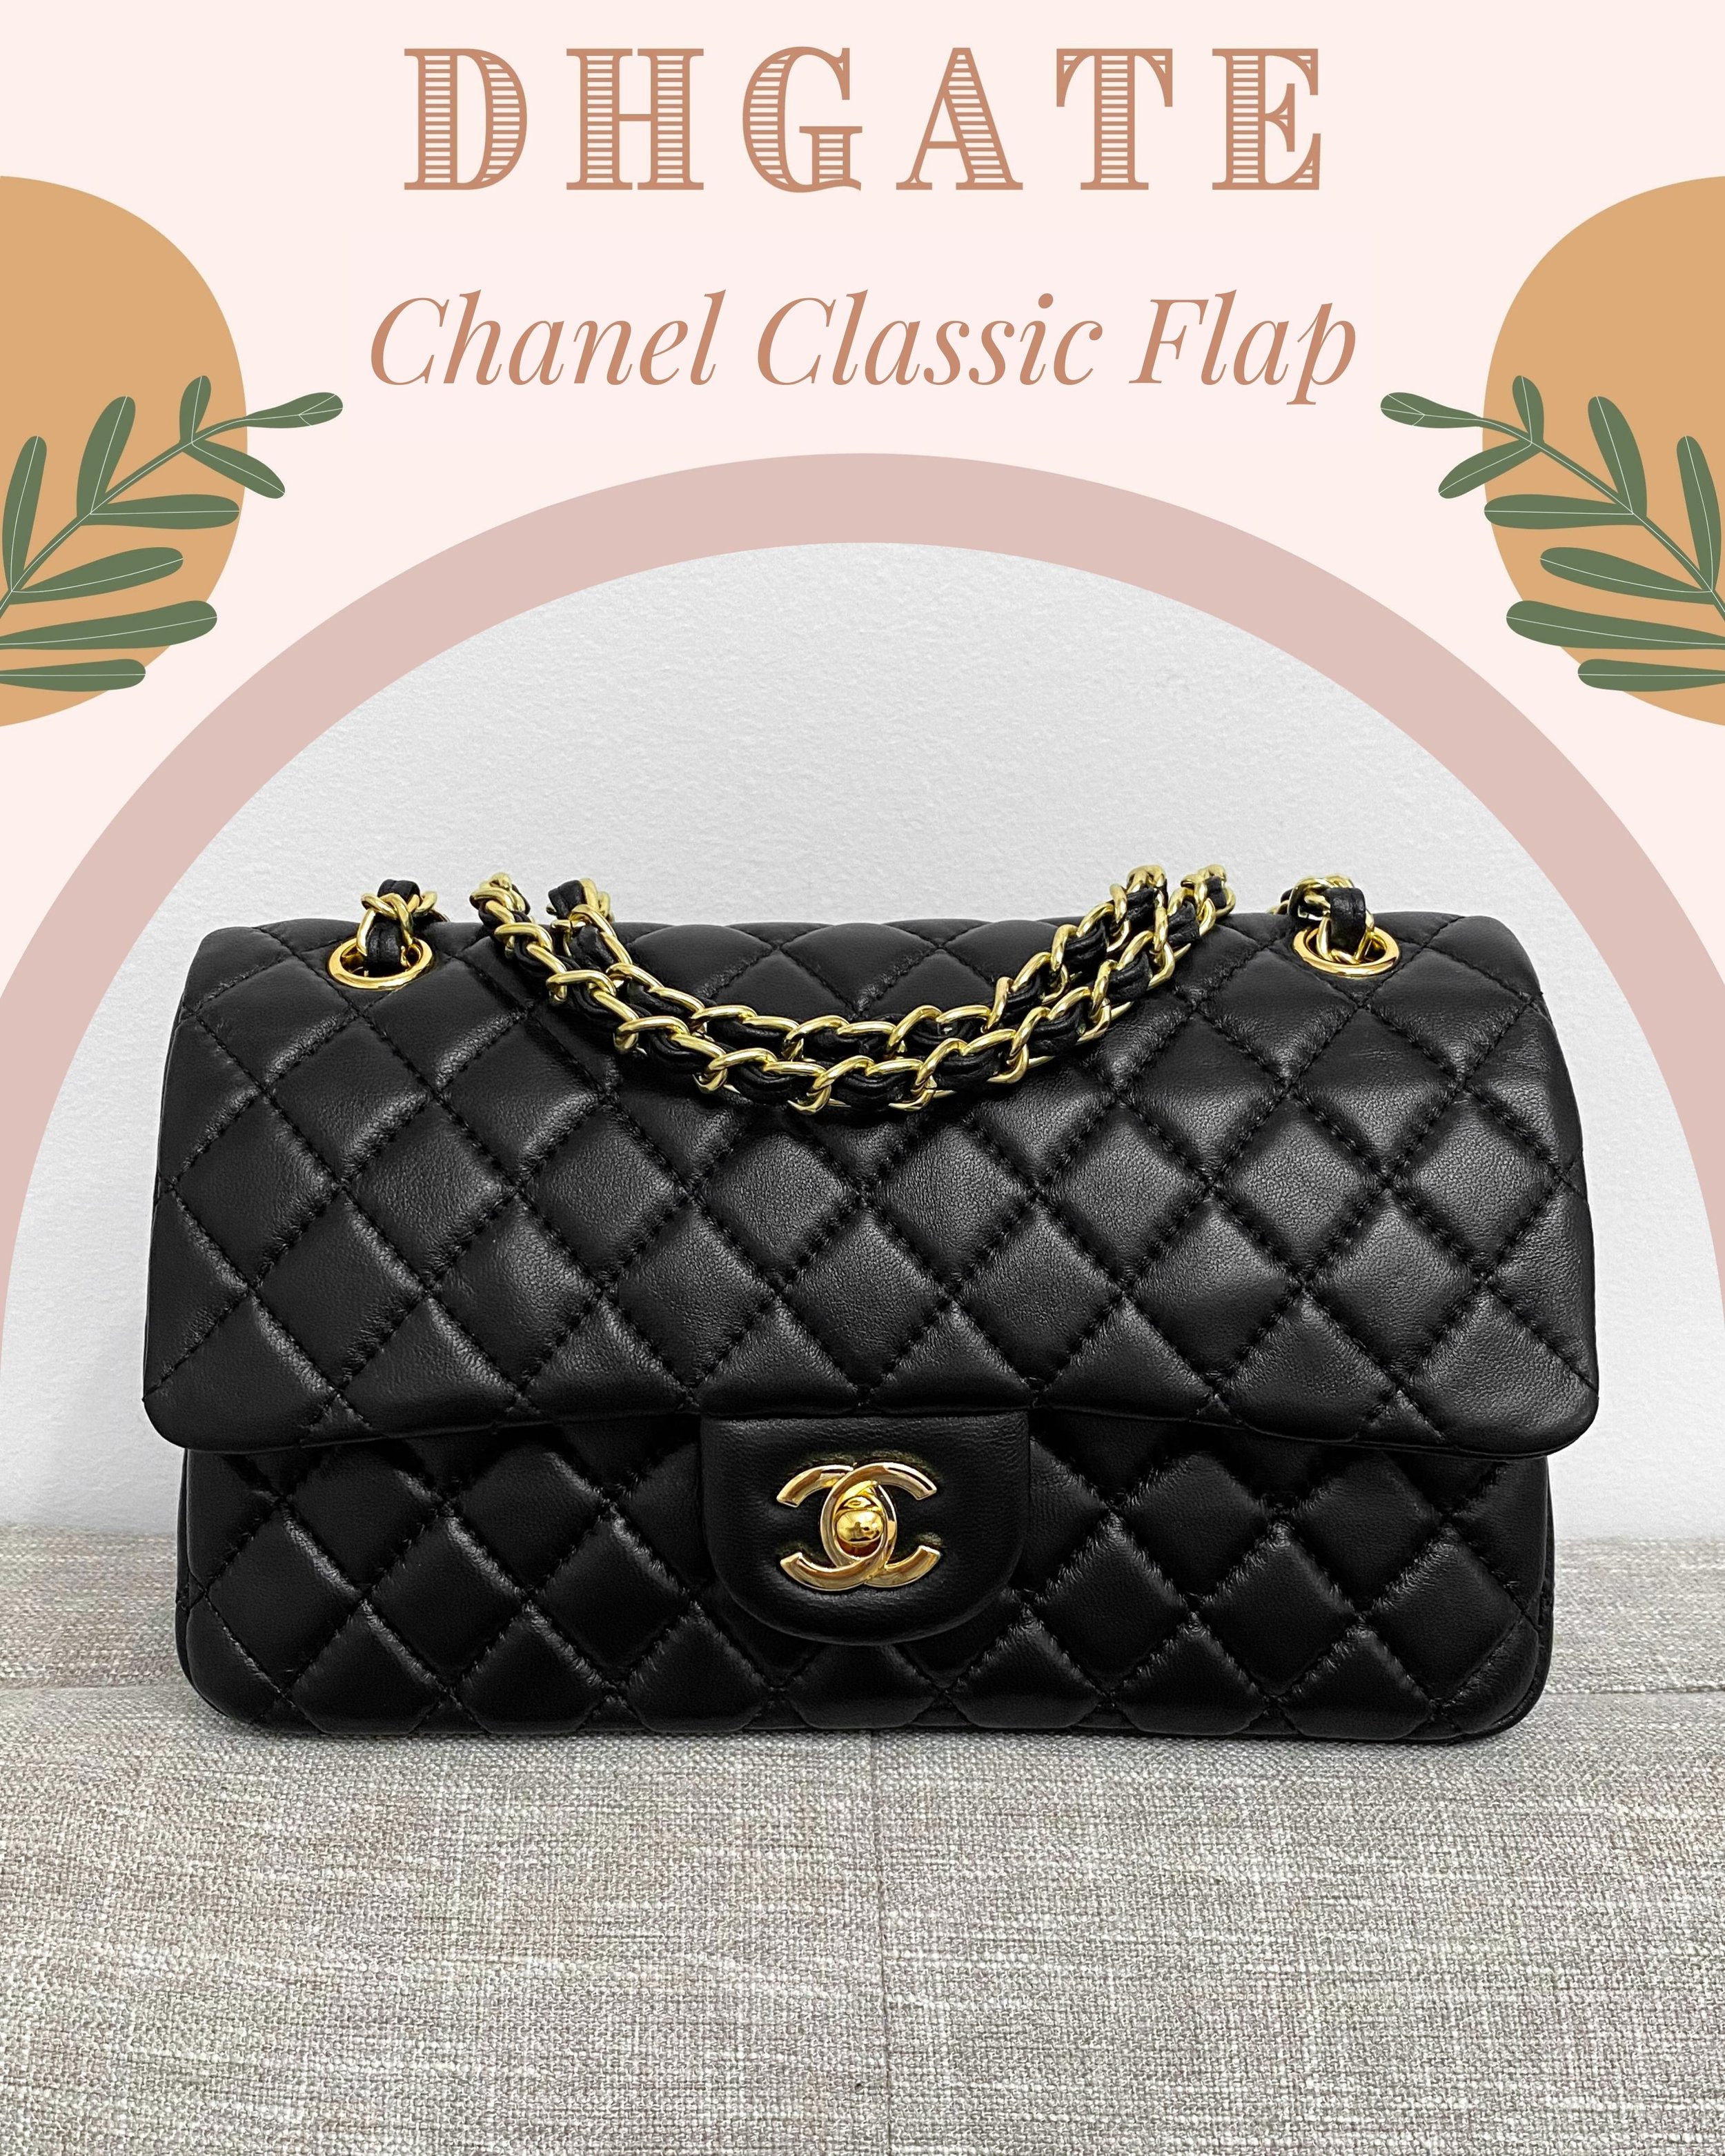 Chanel Classic Flap Size Comparison, Medium VS. Maxi